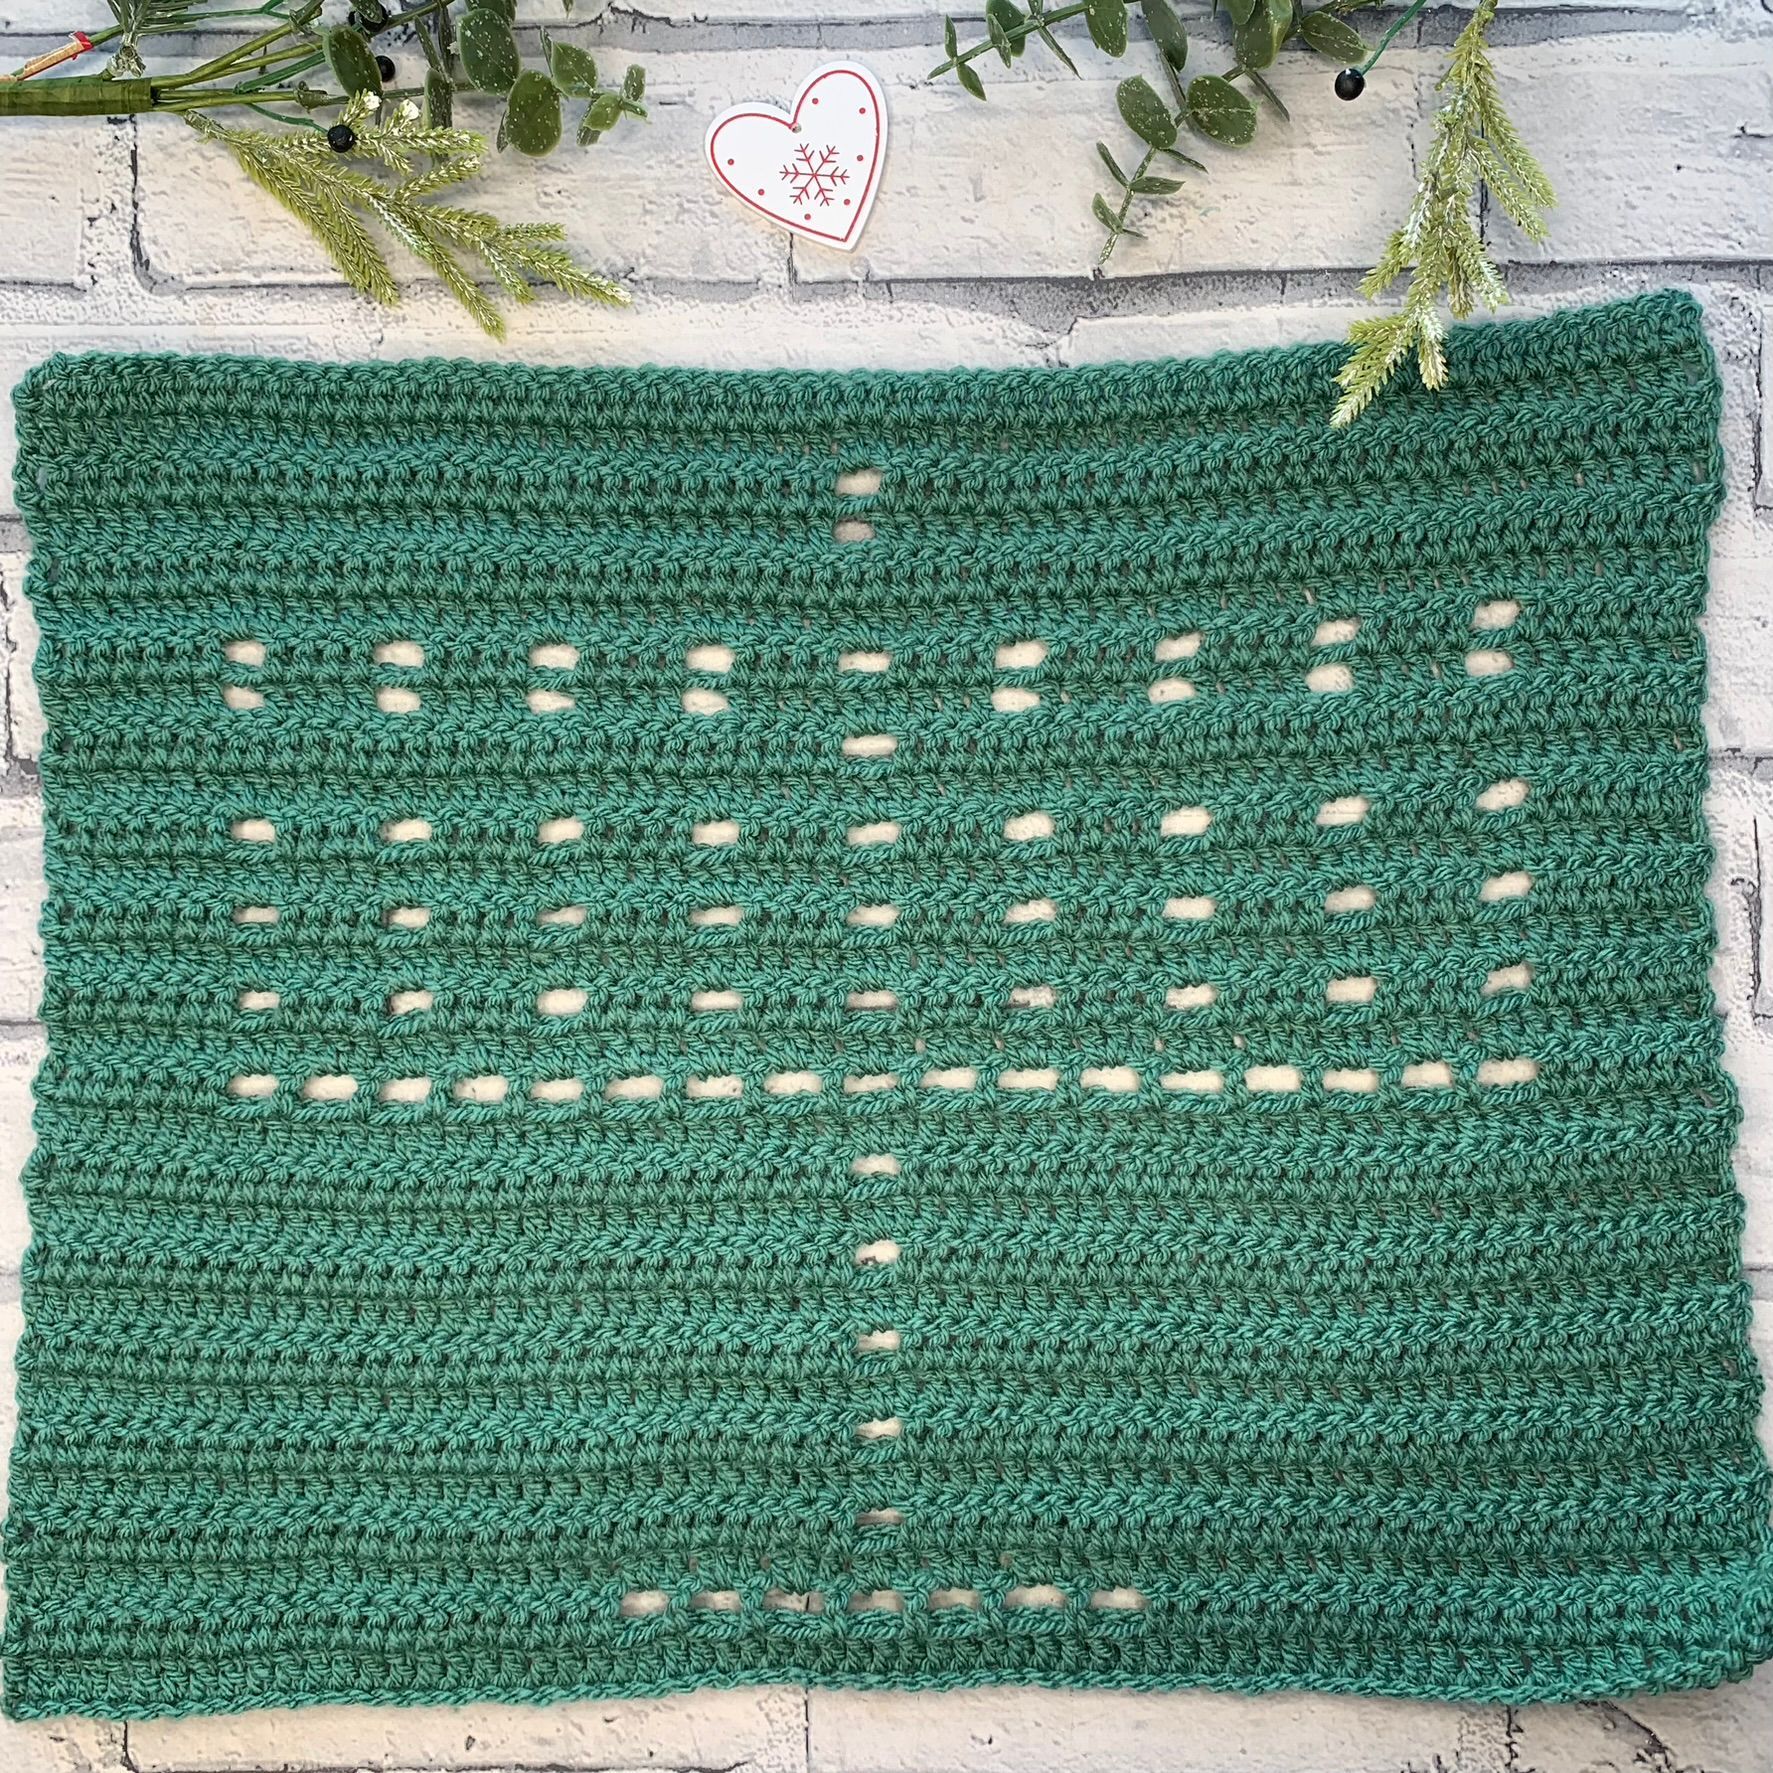 Hanukkah Menorah Filet Crochet Pattern